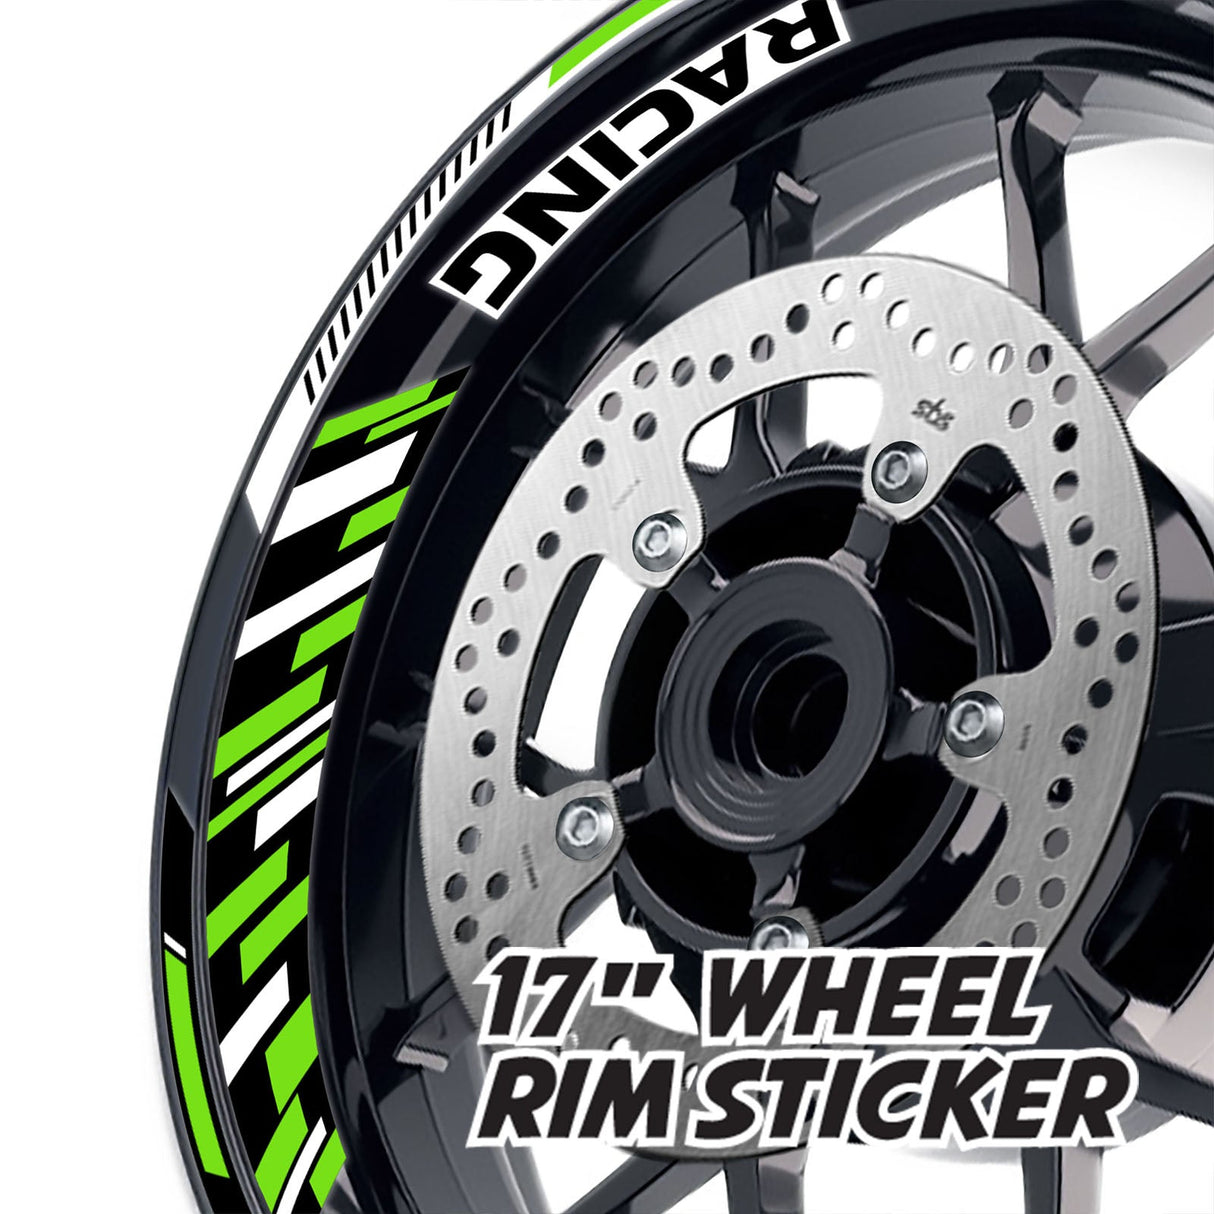 StickerBao Green 17 inch GP16 Platinum Inner Edge Rim Sticker Universal Motorcycle Rim Wheel Decal Racing For Yamaha